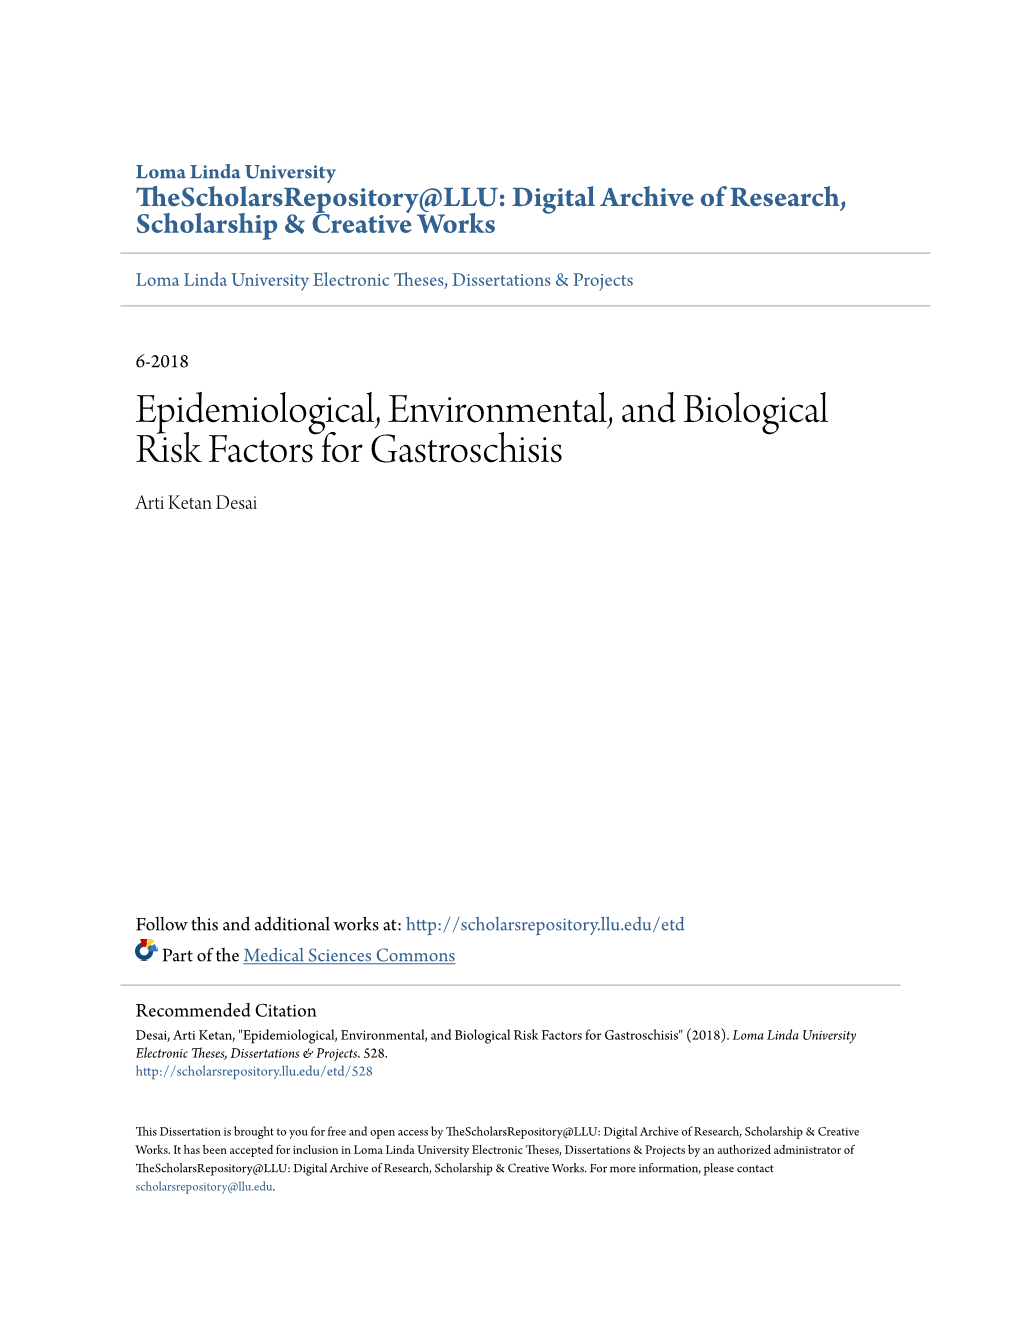 Epidemiological, Environmental, and Biological Risk Factors for Gastroschisis Arti Ketan Desai